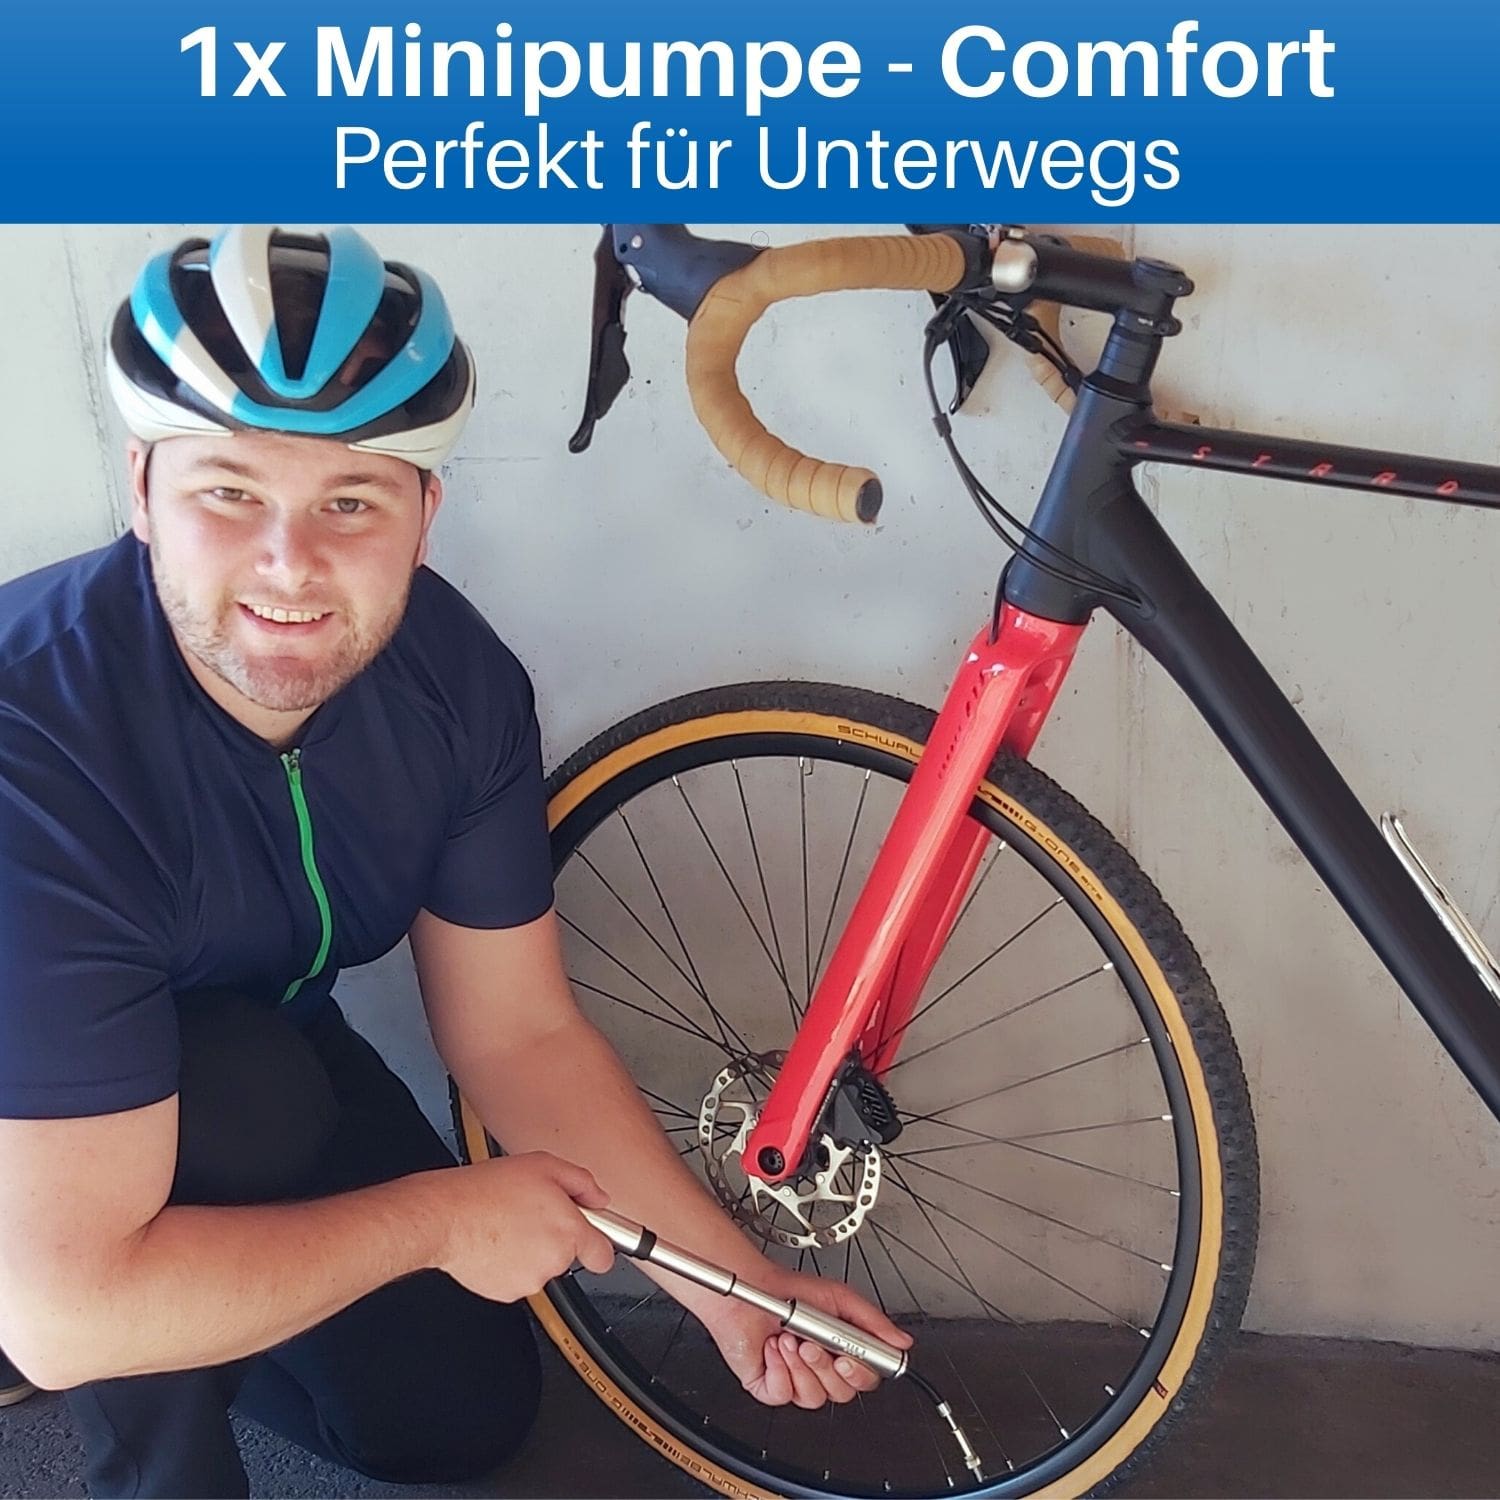 Fahrrad Minipumpe in der Comfort Version.